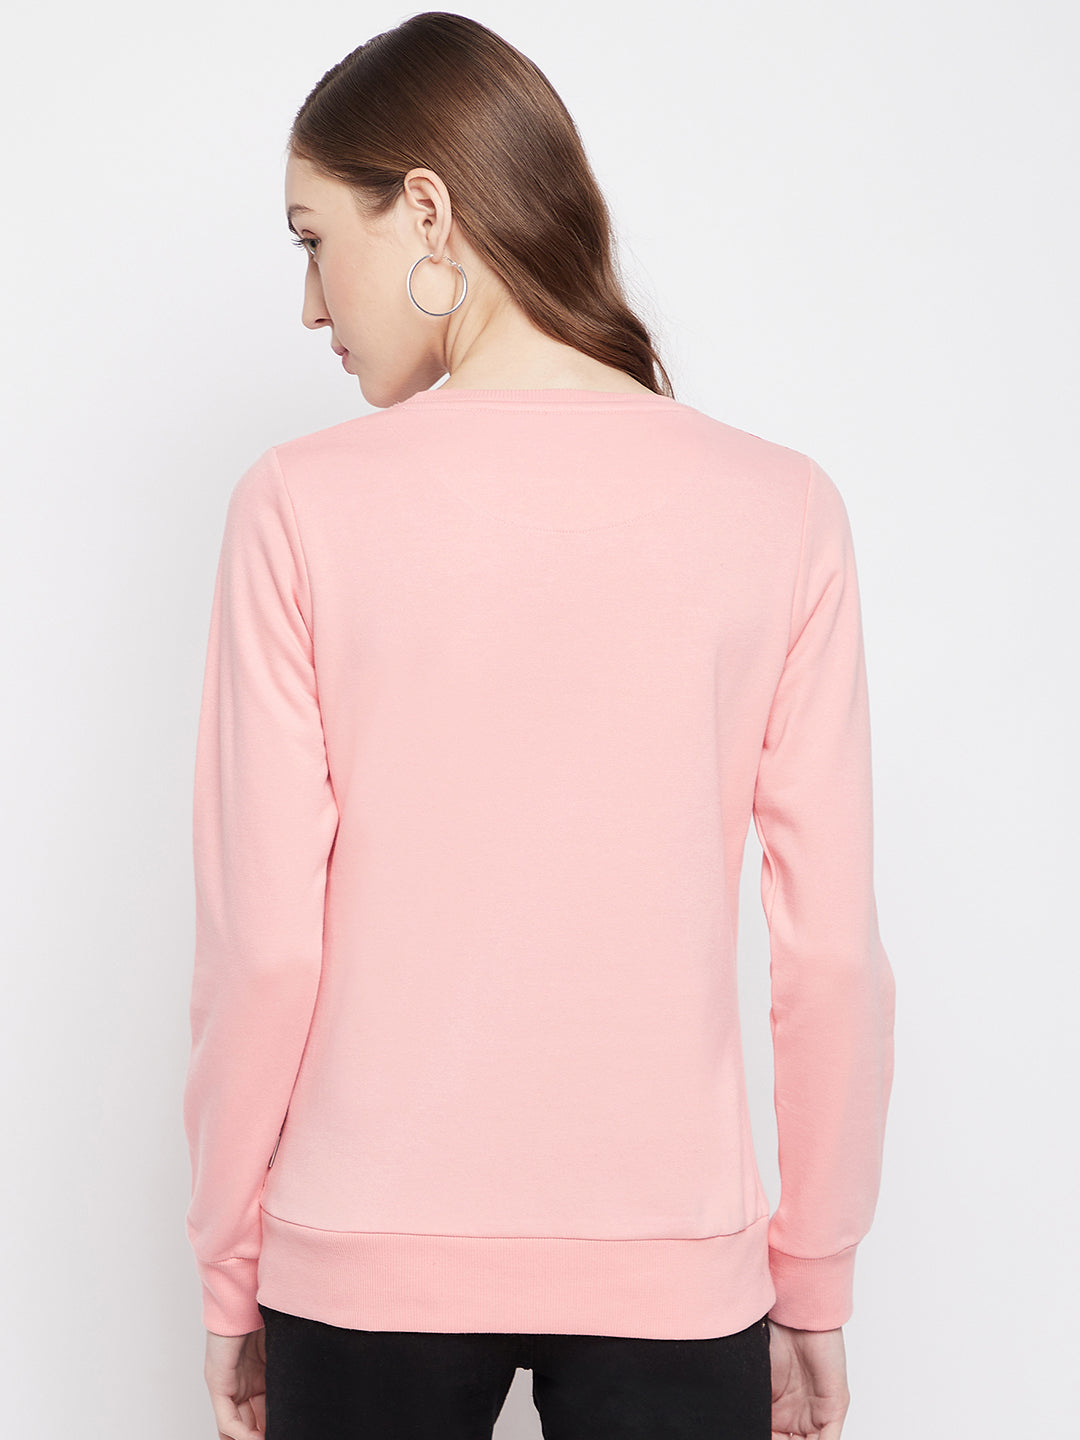 Pink Printed Round Neck Sweatshirt - Women Sweatshirts